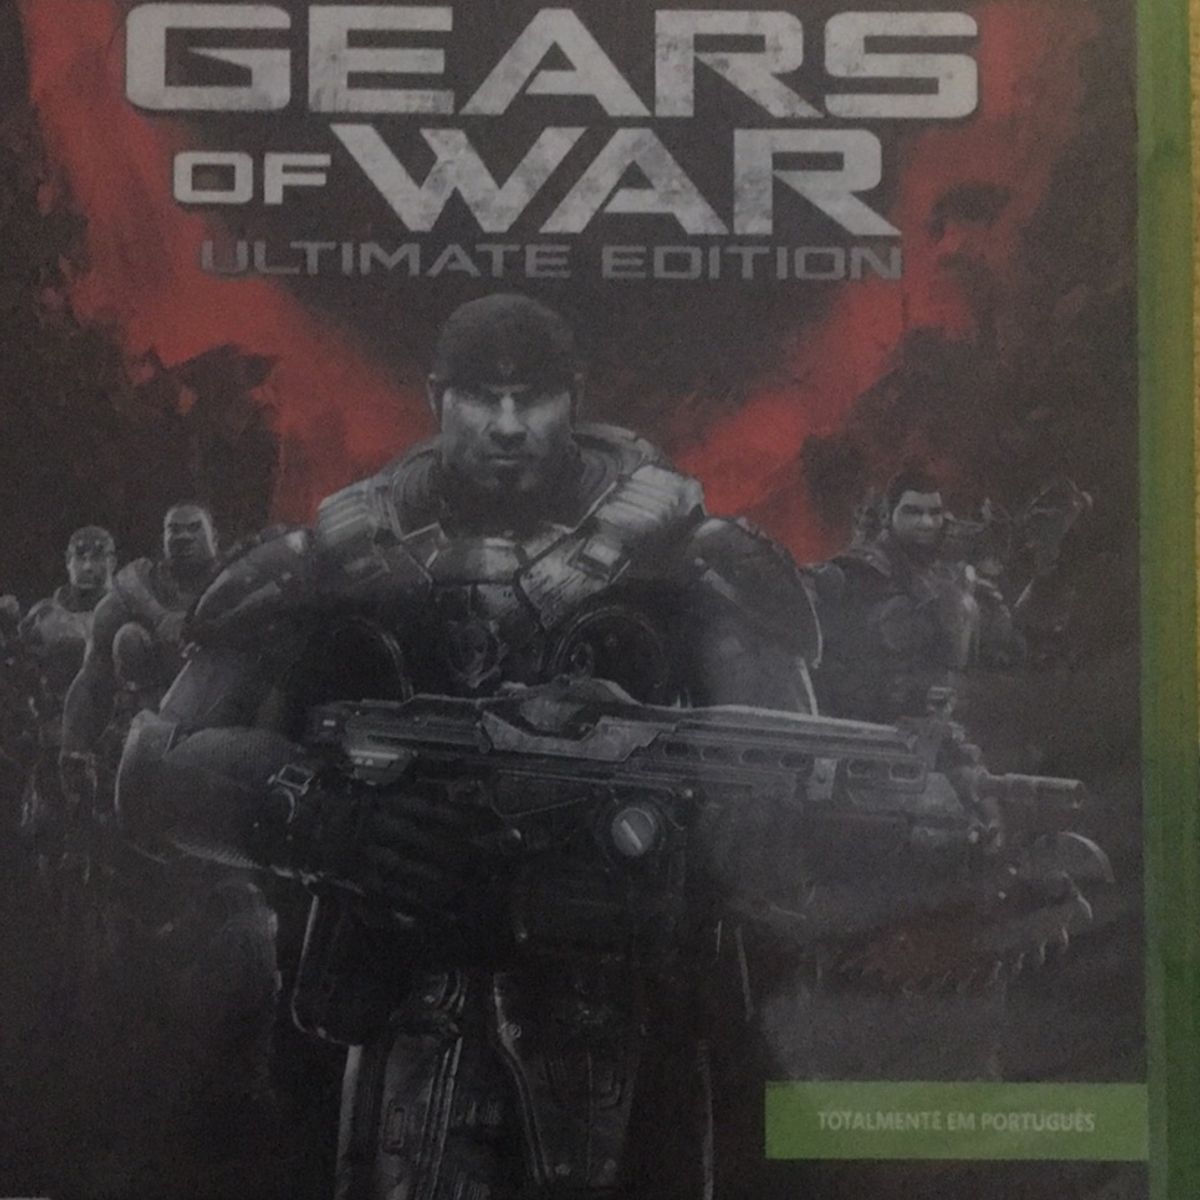 Gears of War: Ultimate Edition terá todos os jogos da série